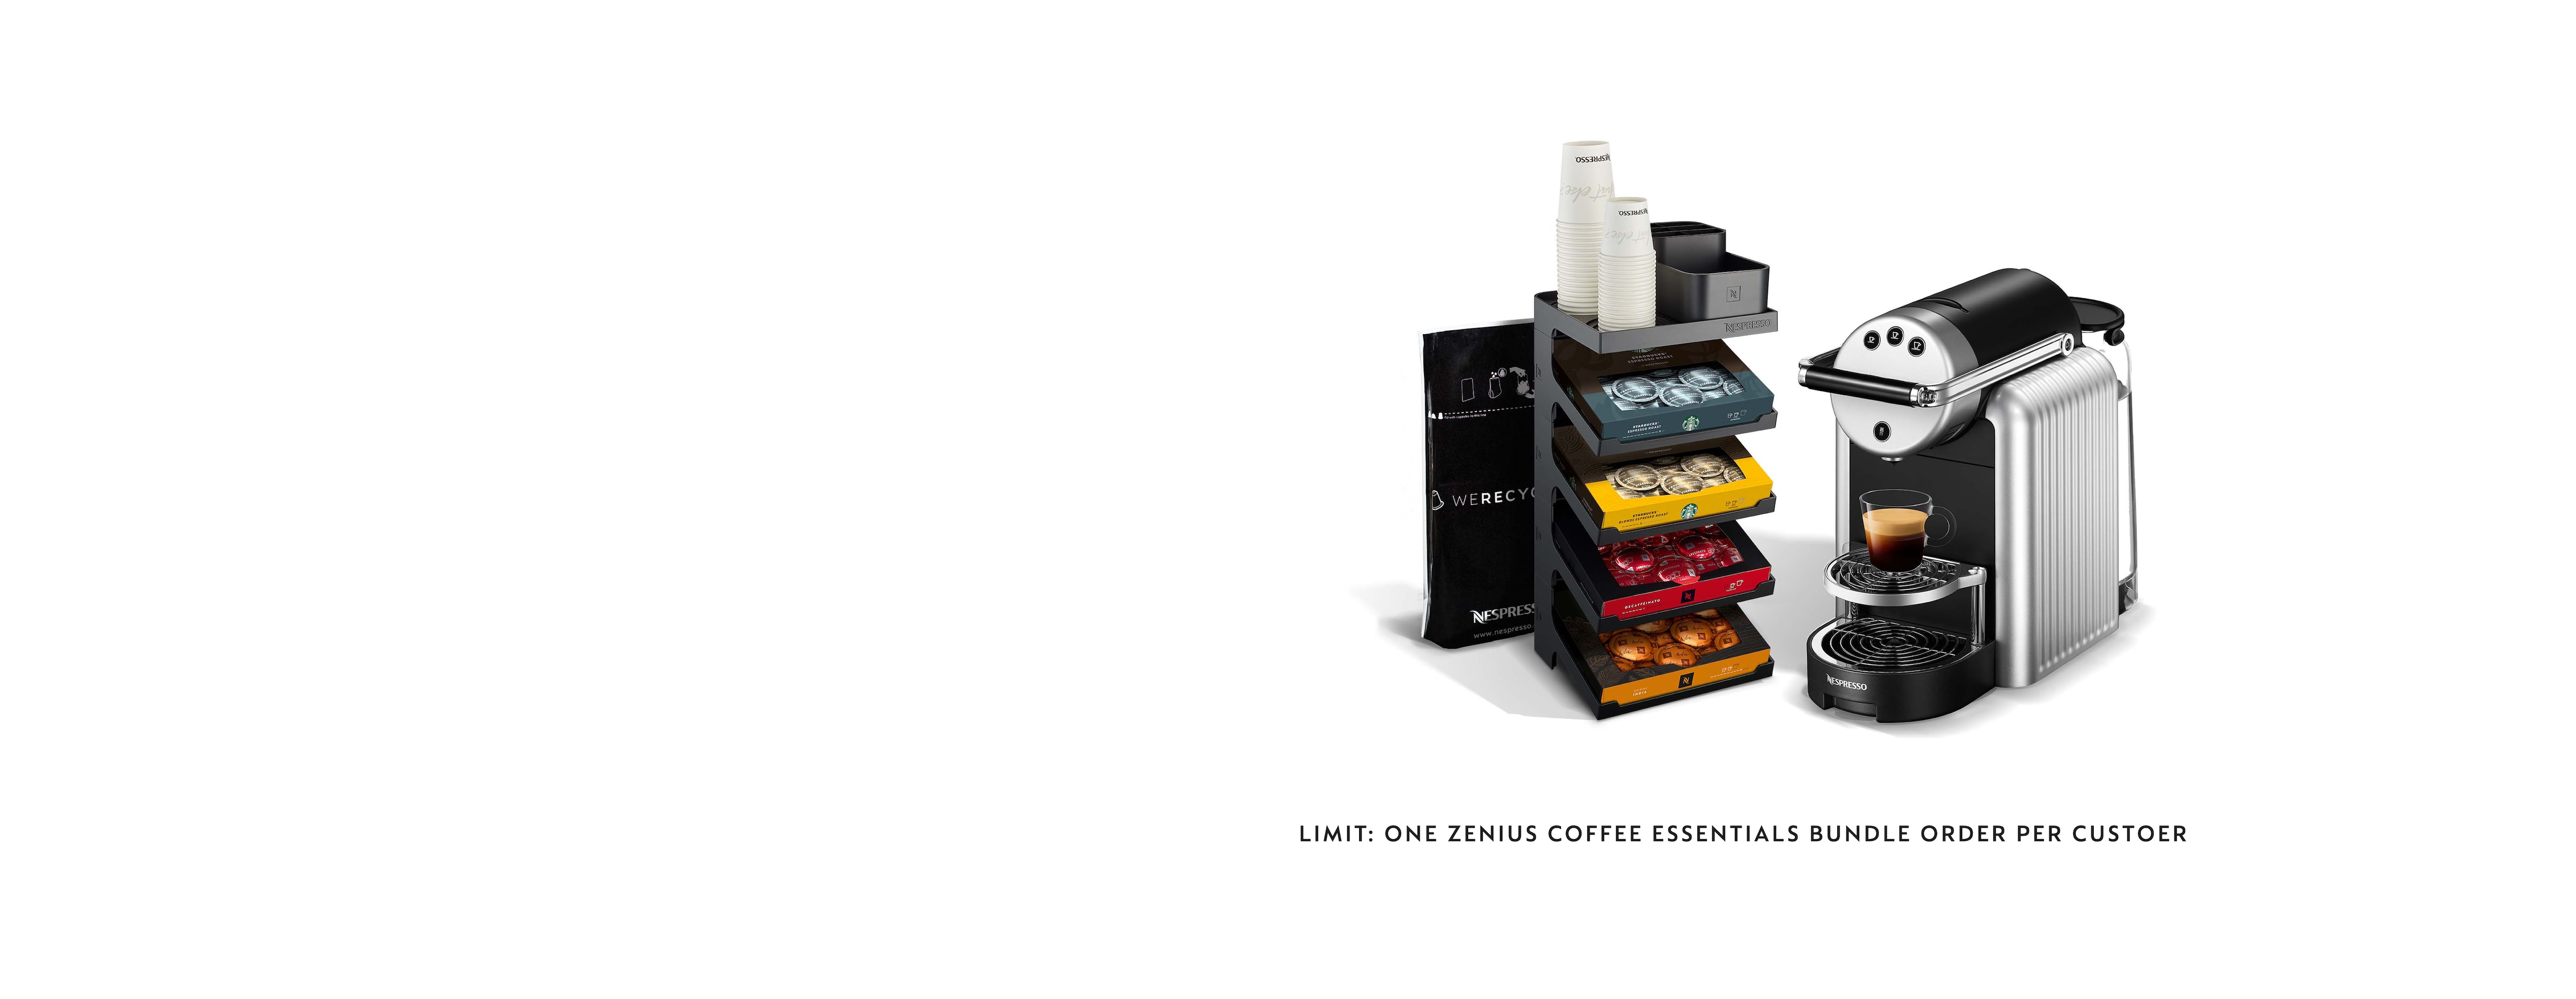 Zenius Coffee Essentials featuring Starbucks® | Machines 